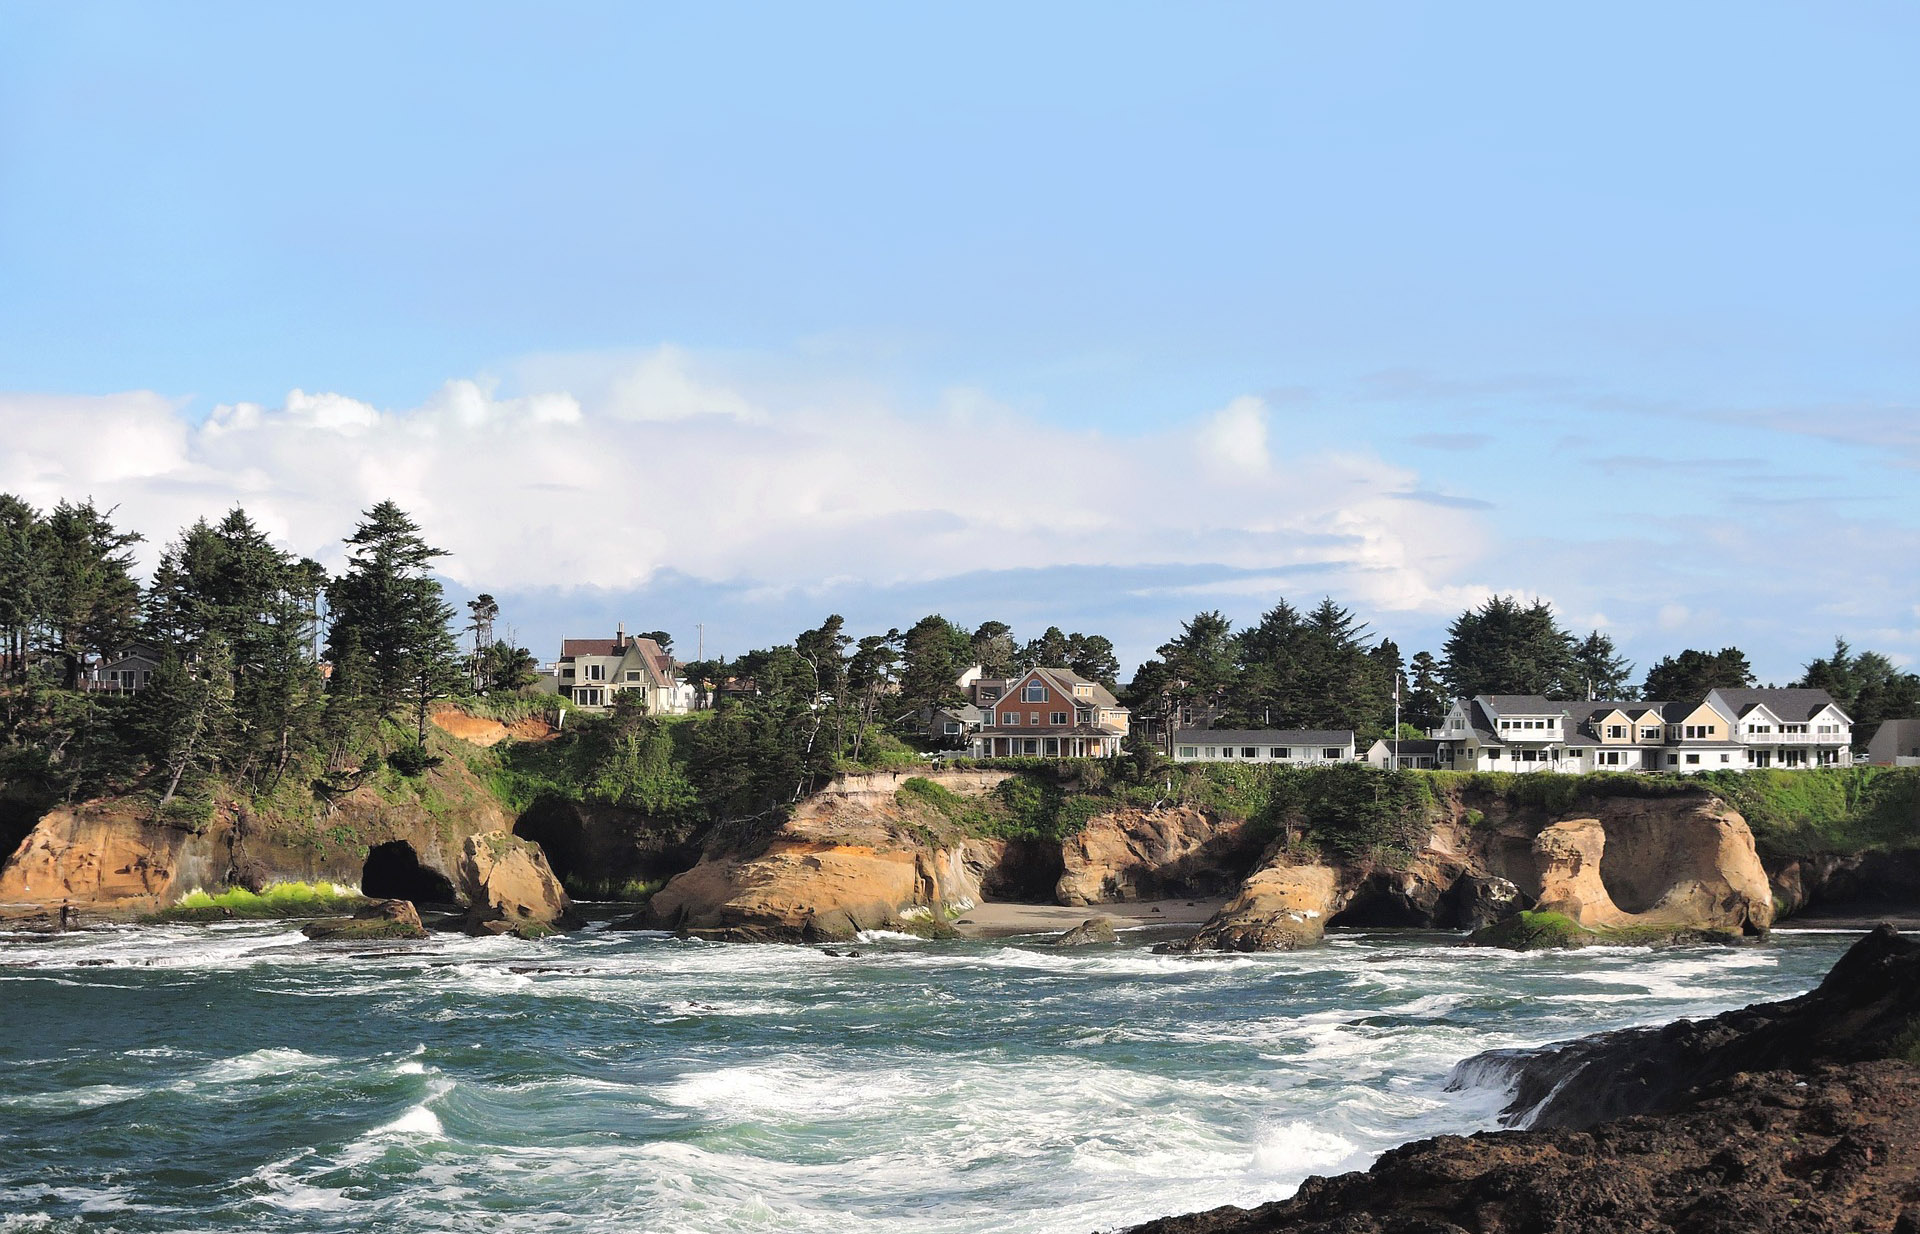 Houses set on a cliff above the rough sea, Oregon, USA